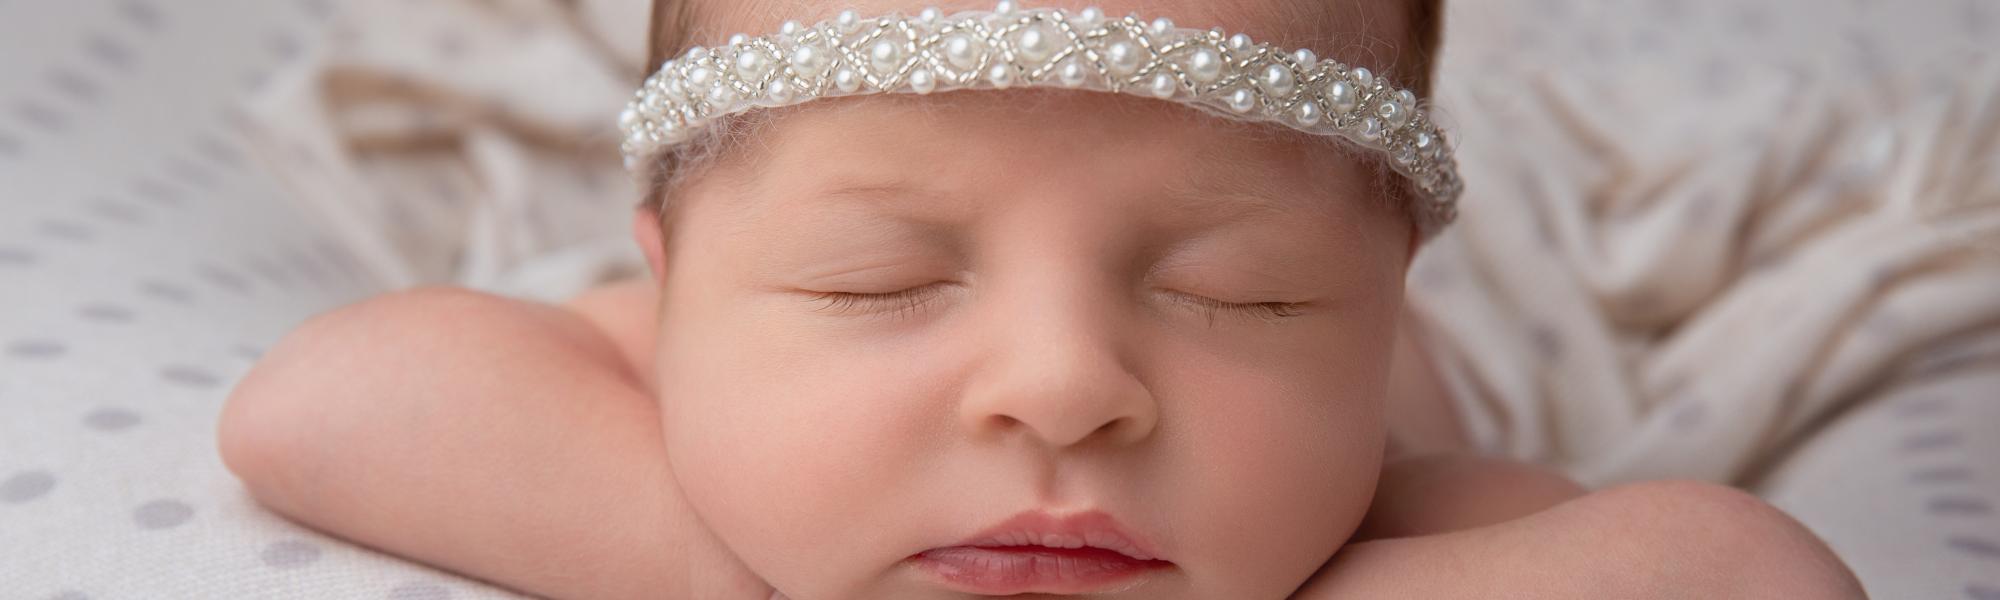 Newborn-Fotoshooting bei piccolini kids- & newbornphotography.